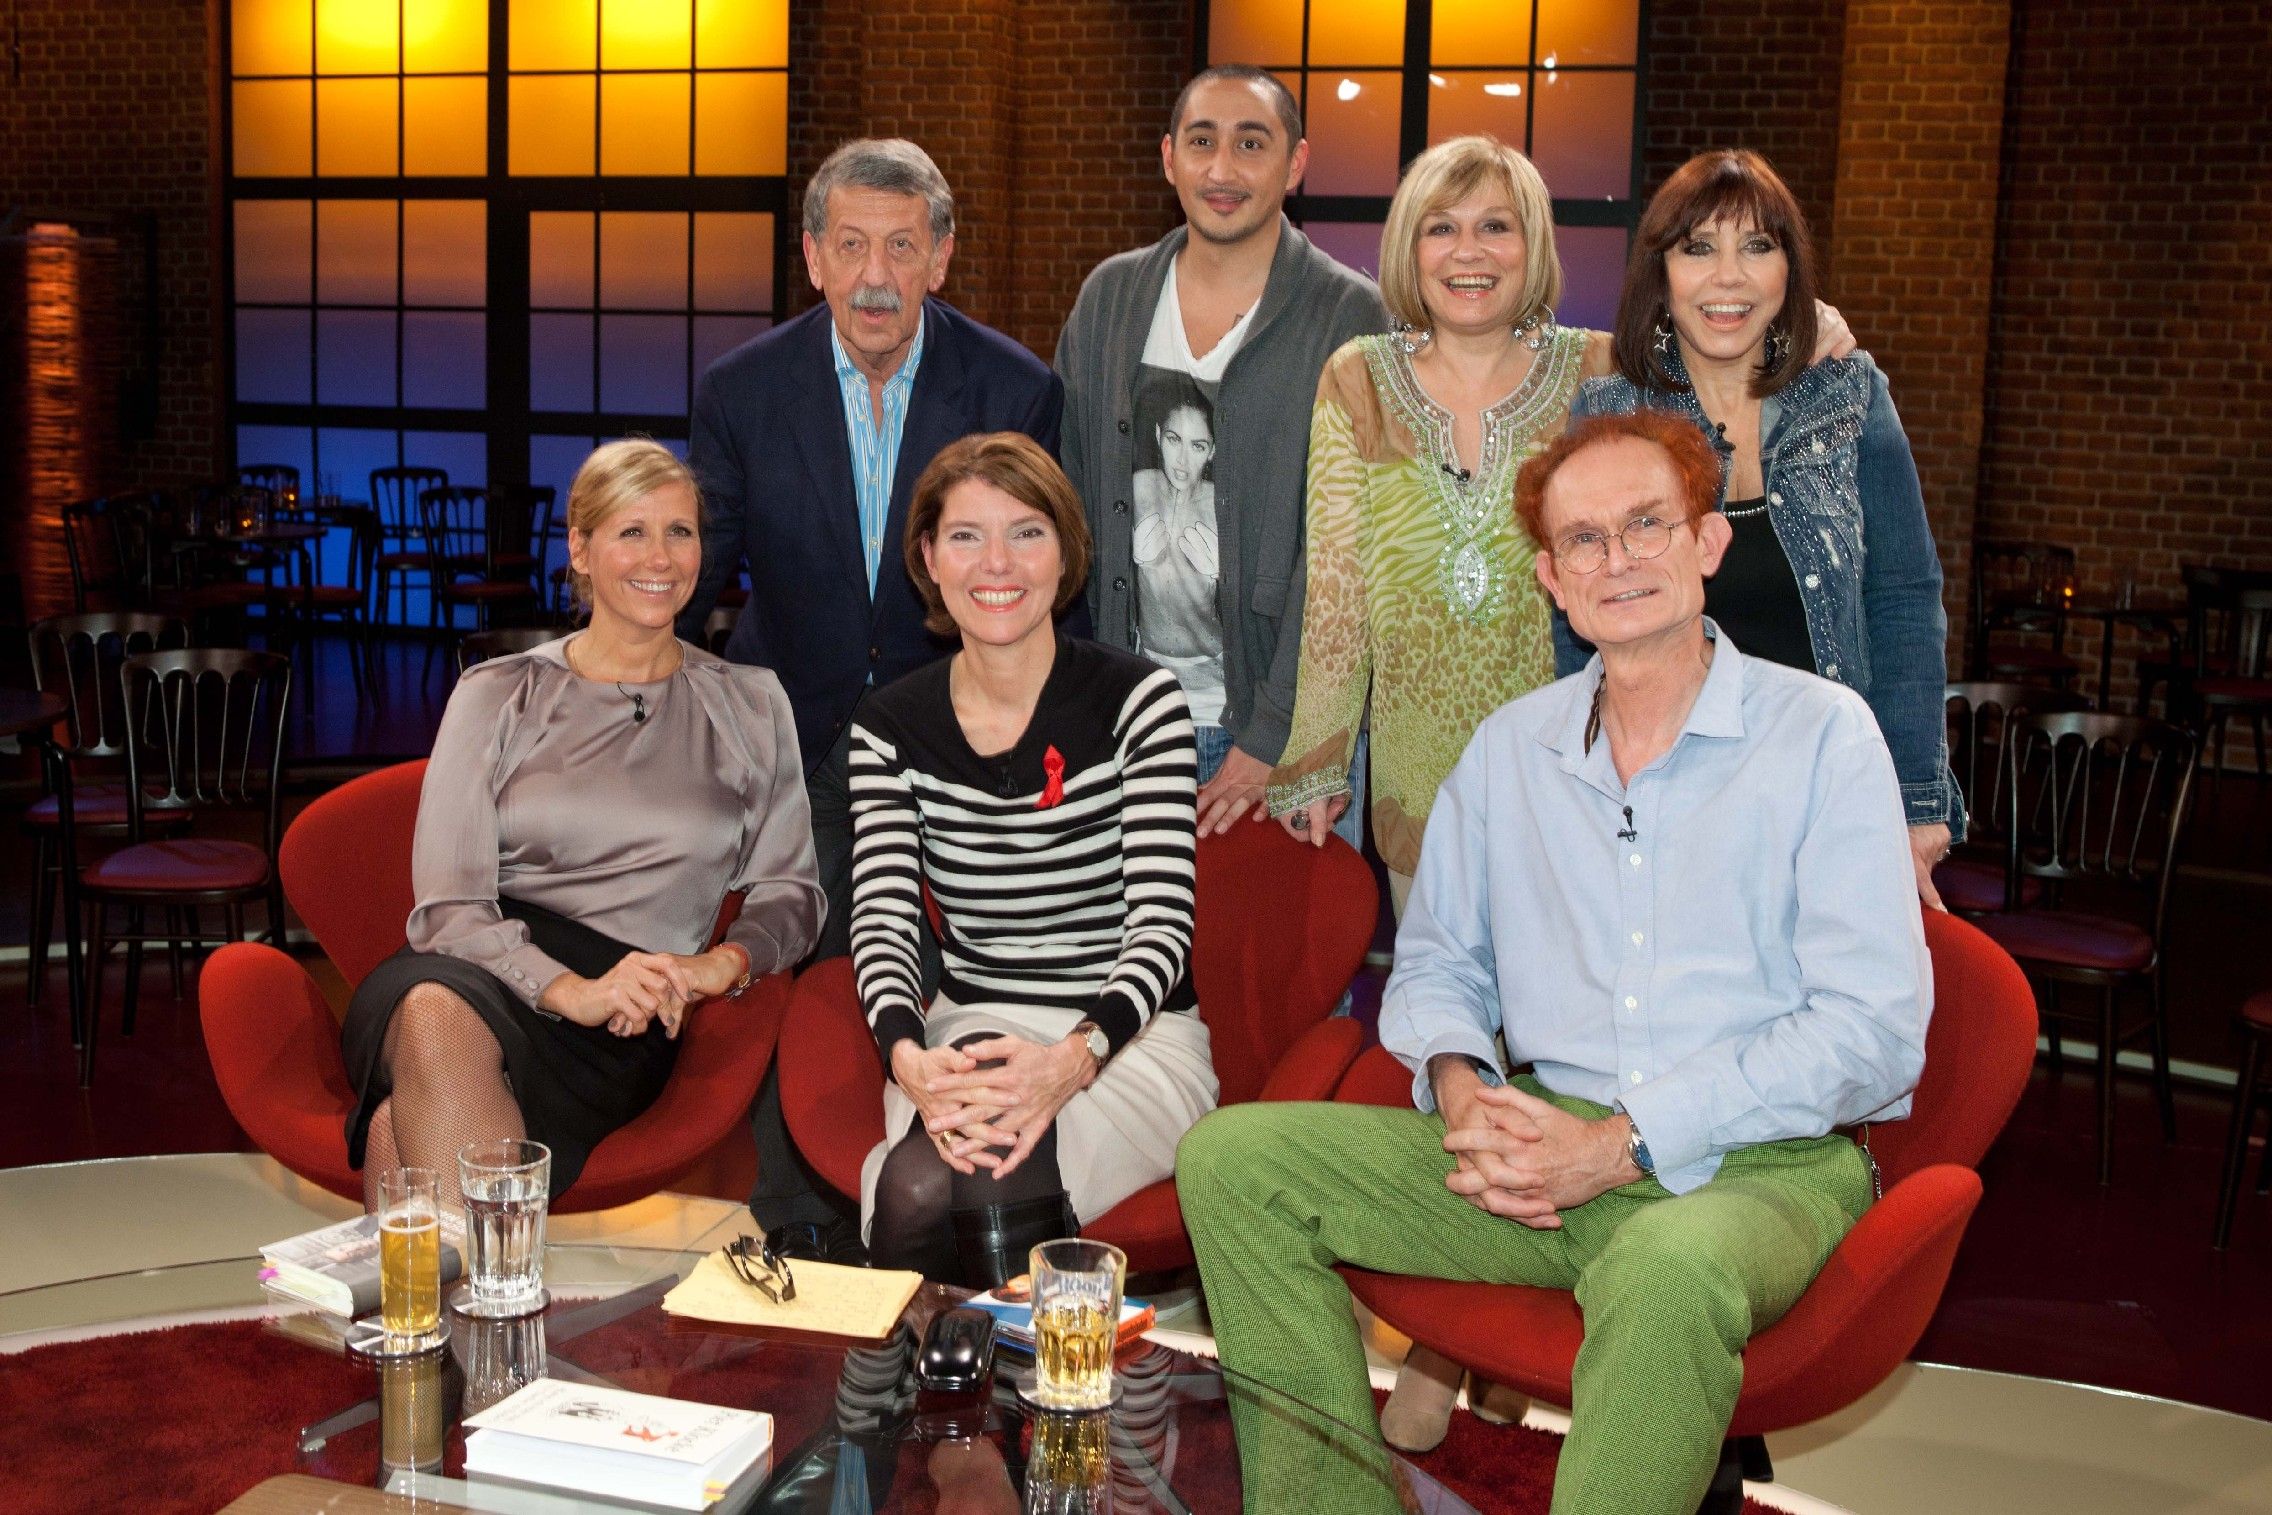 Celebrities on German WDR TV talkshow 'Kolner Treff' at WDR studios | Picture 132061